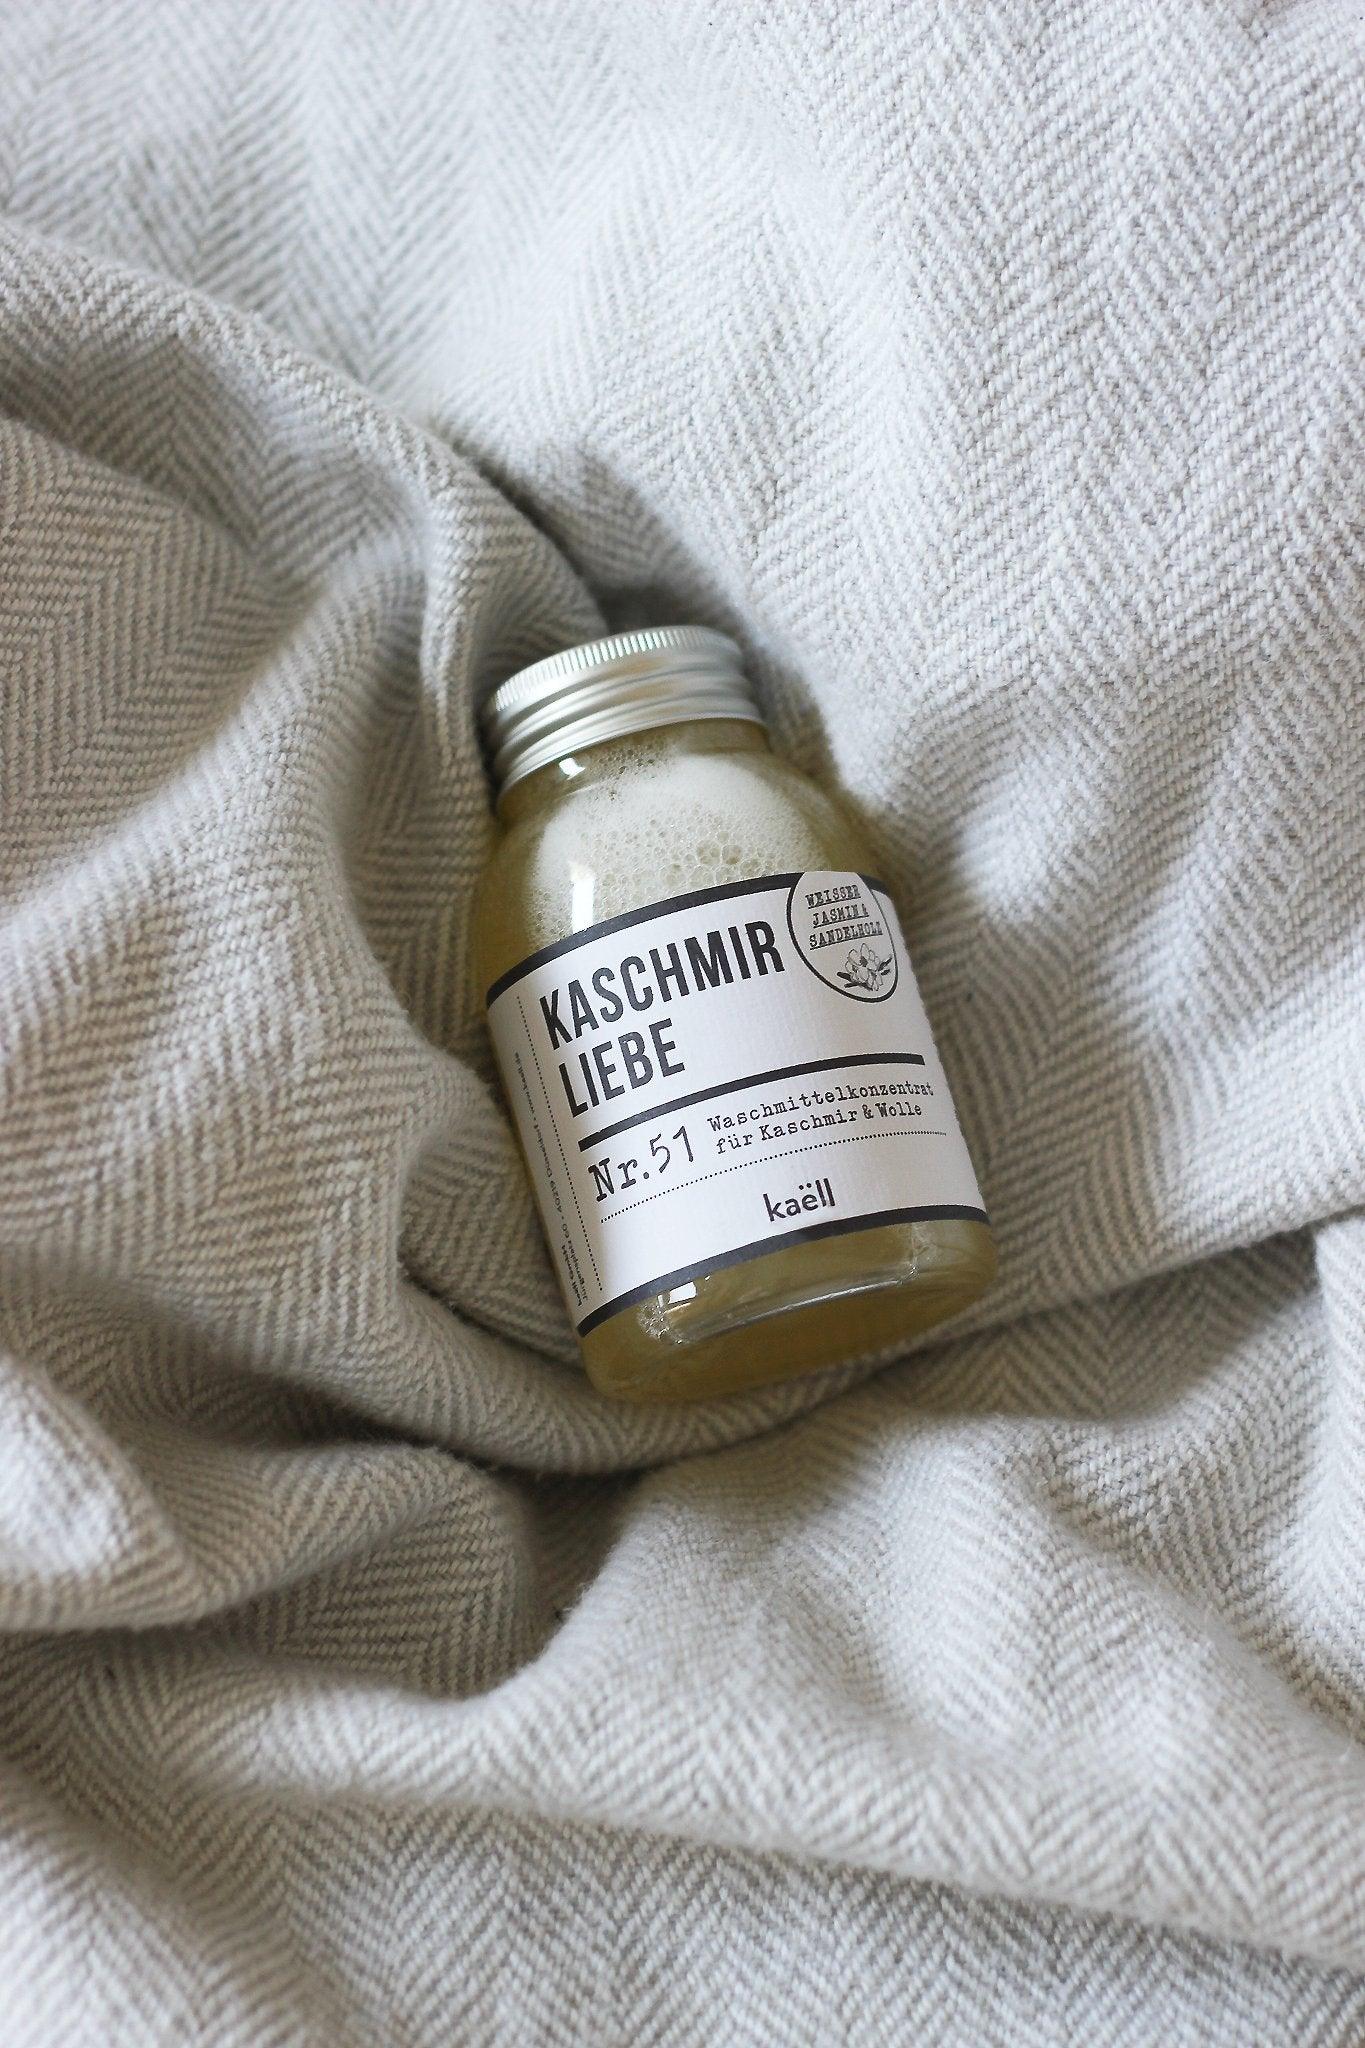 kaëll - Waschmittel "Kaschmirliebe" für Kaschmir und Wolle | 250 ml - Leja Concept Store kaëll